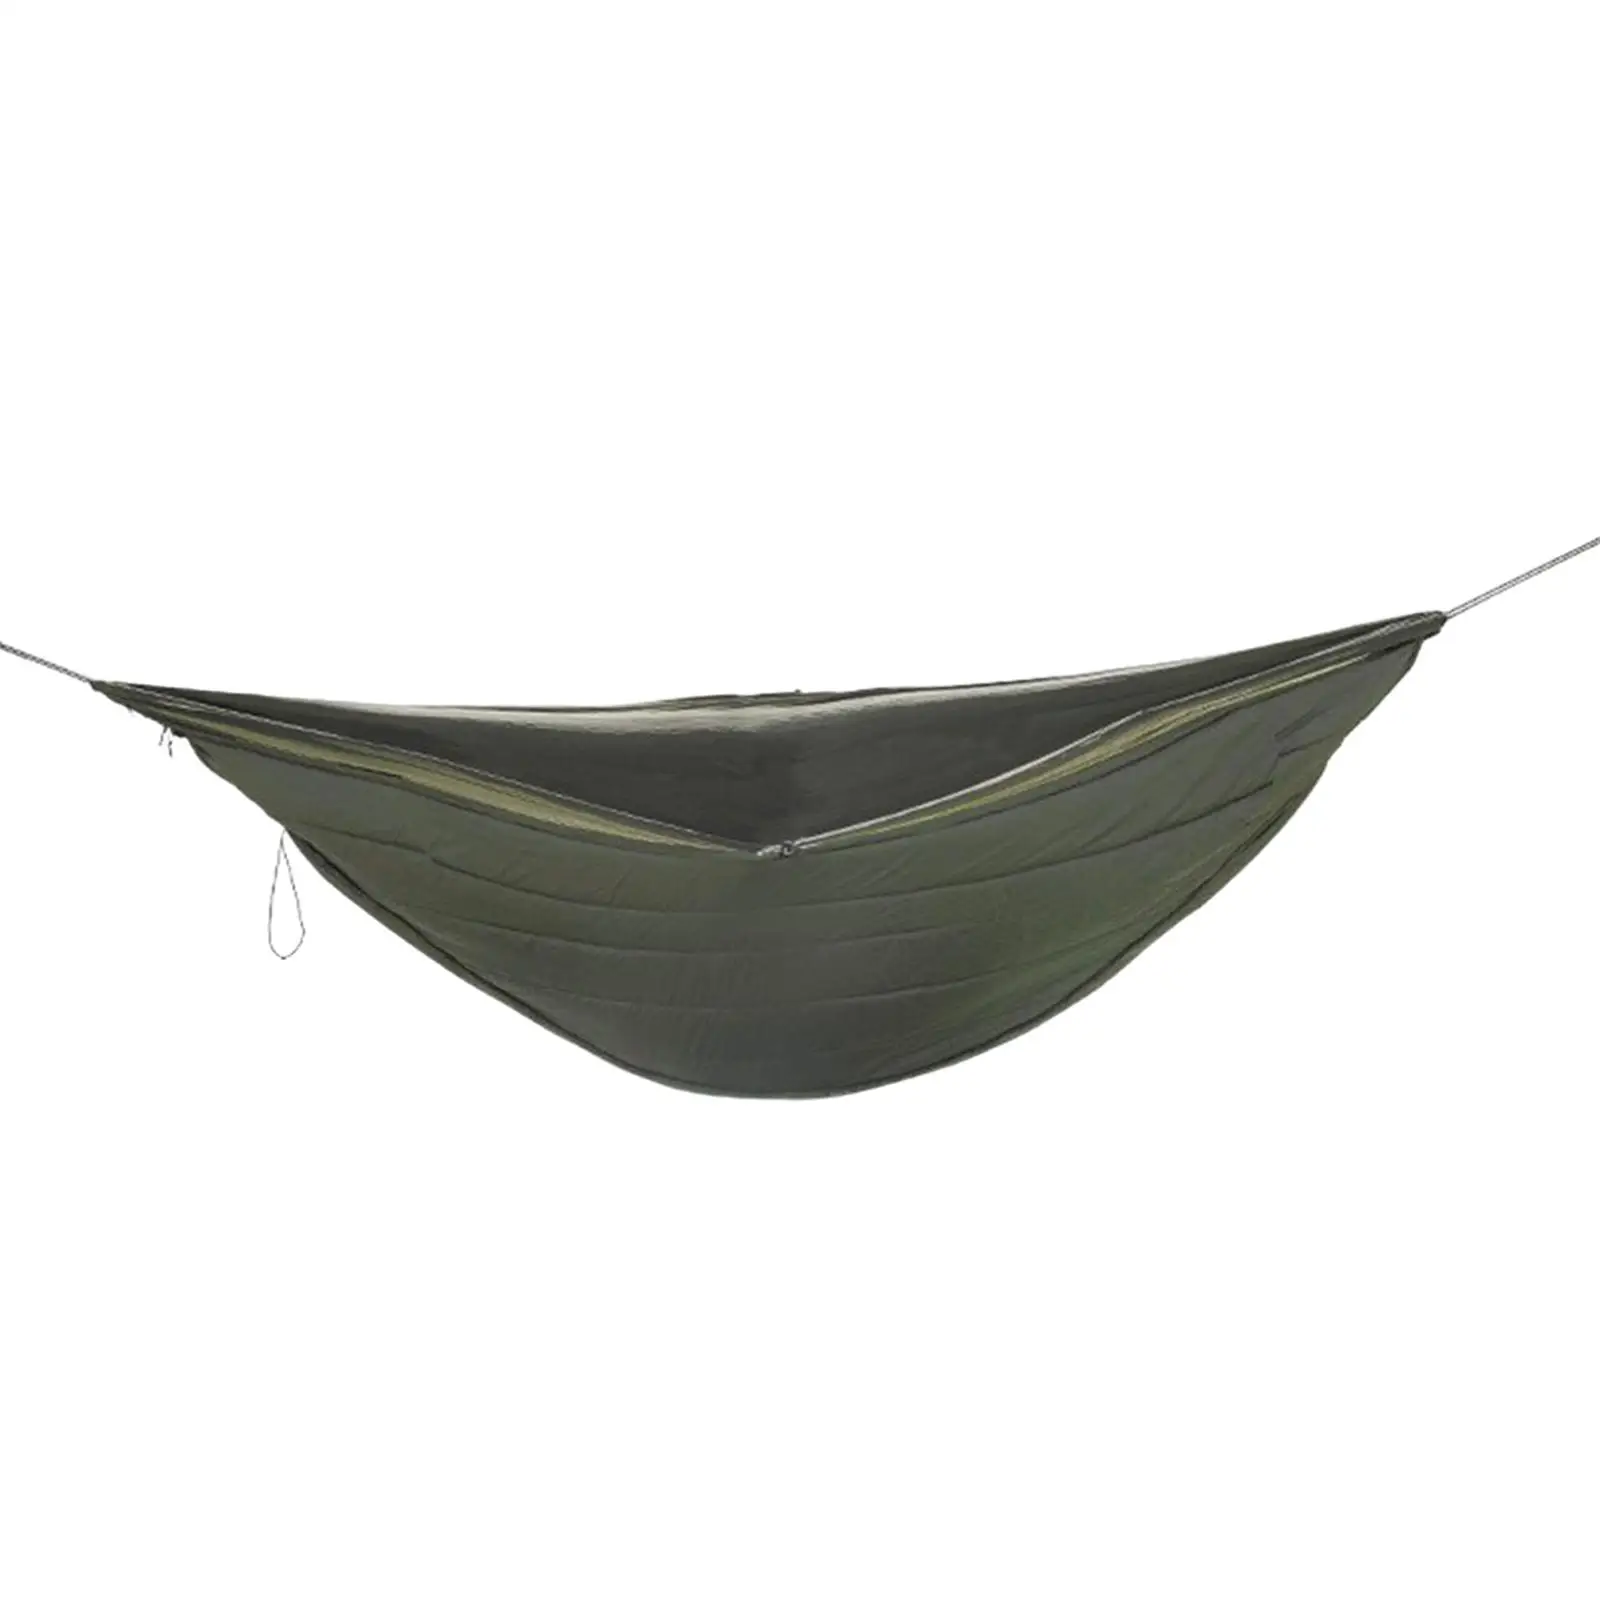 Hammock Underquilt Under Quilt Blanket Lightweight Warm Insulated Camping Sleeping Hammock for Outdoor Hiking Fishing Beach